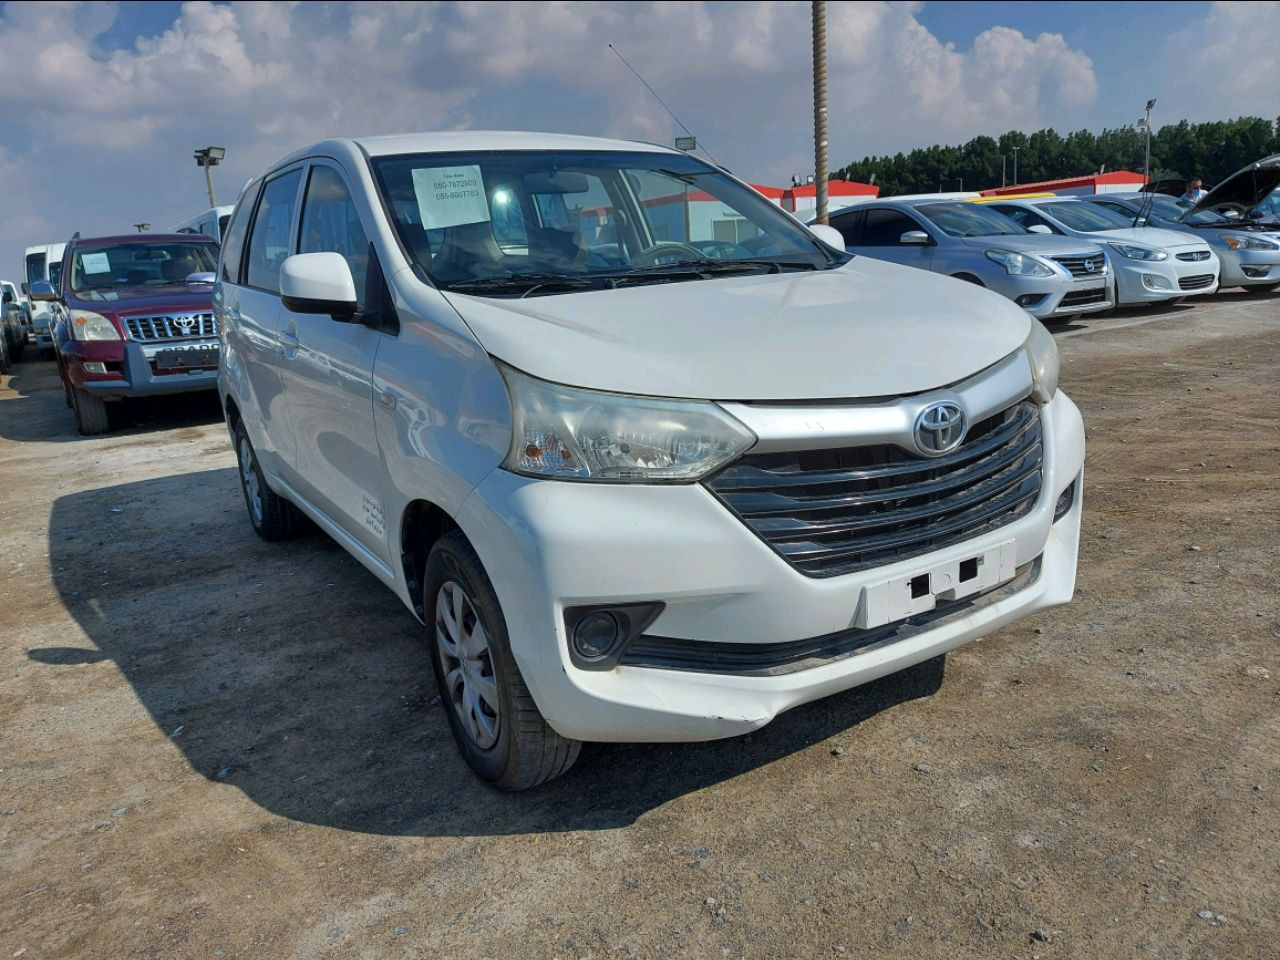 Toyota Avanza 2016 AED 24,000, GCC Spec, Negotiable